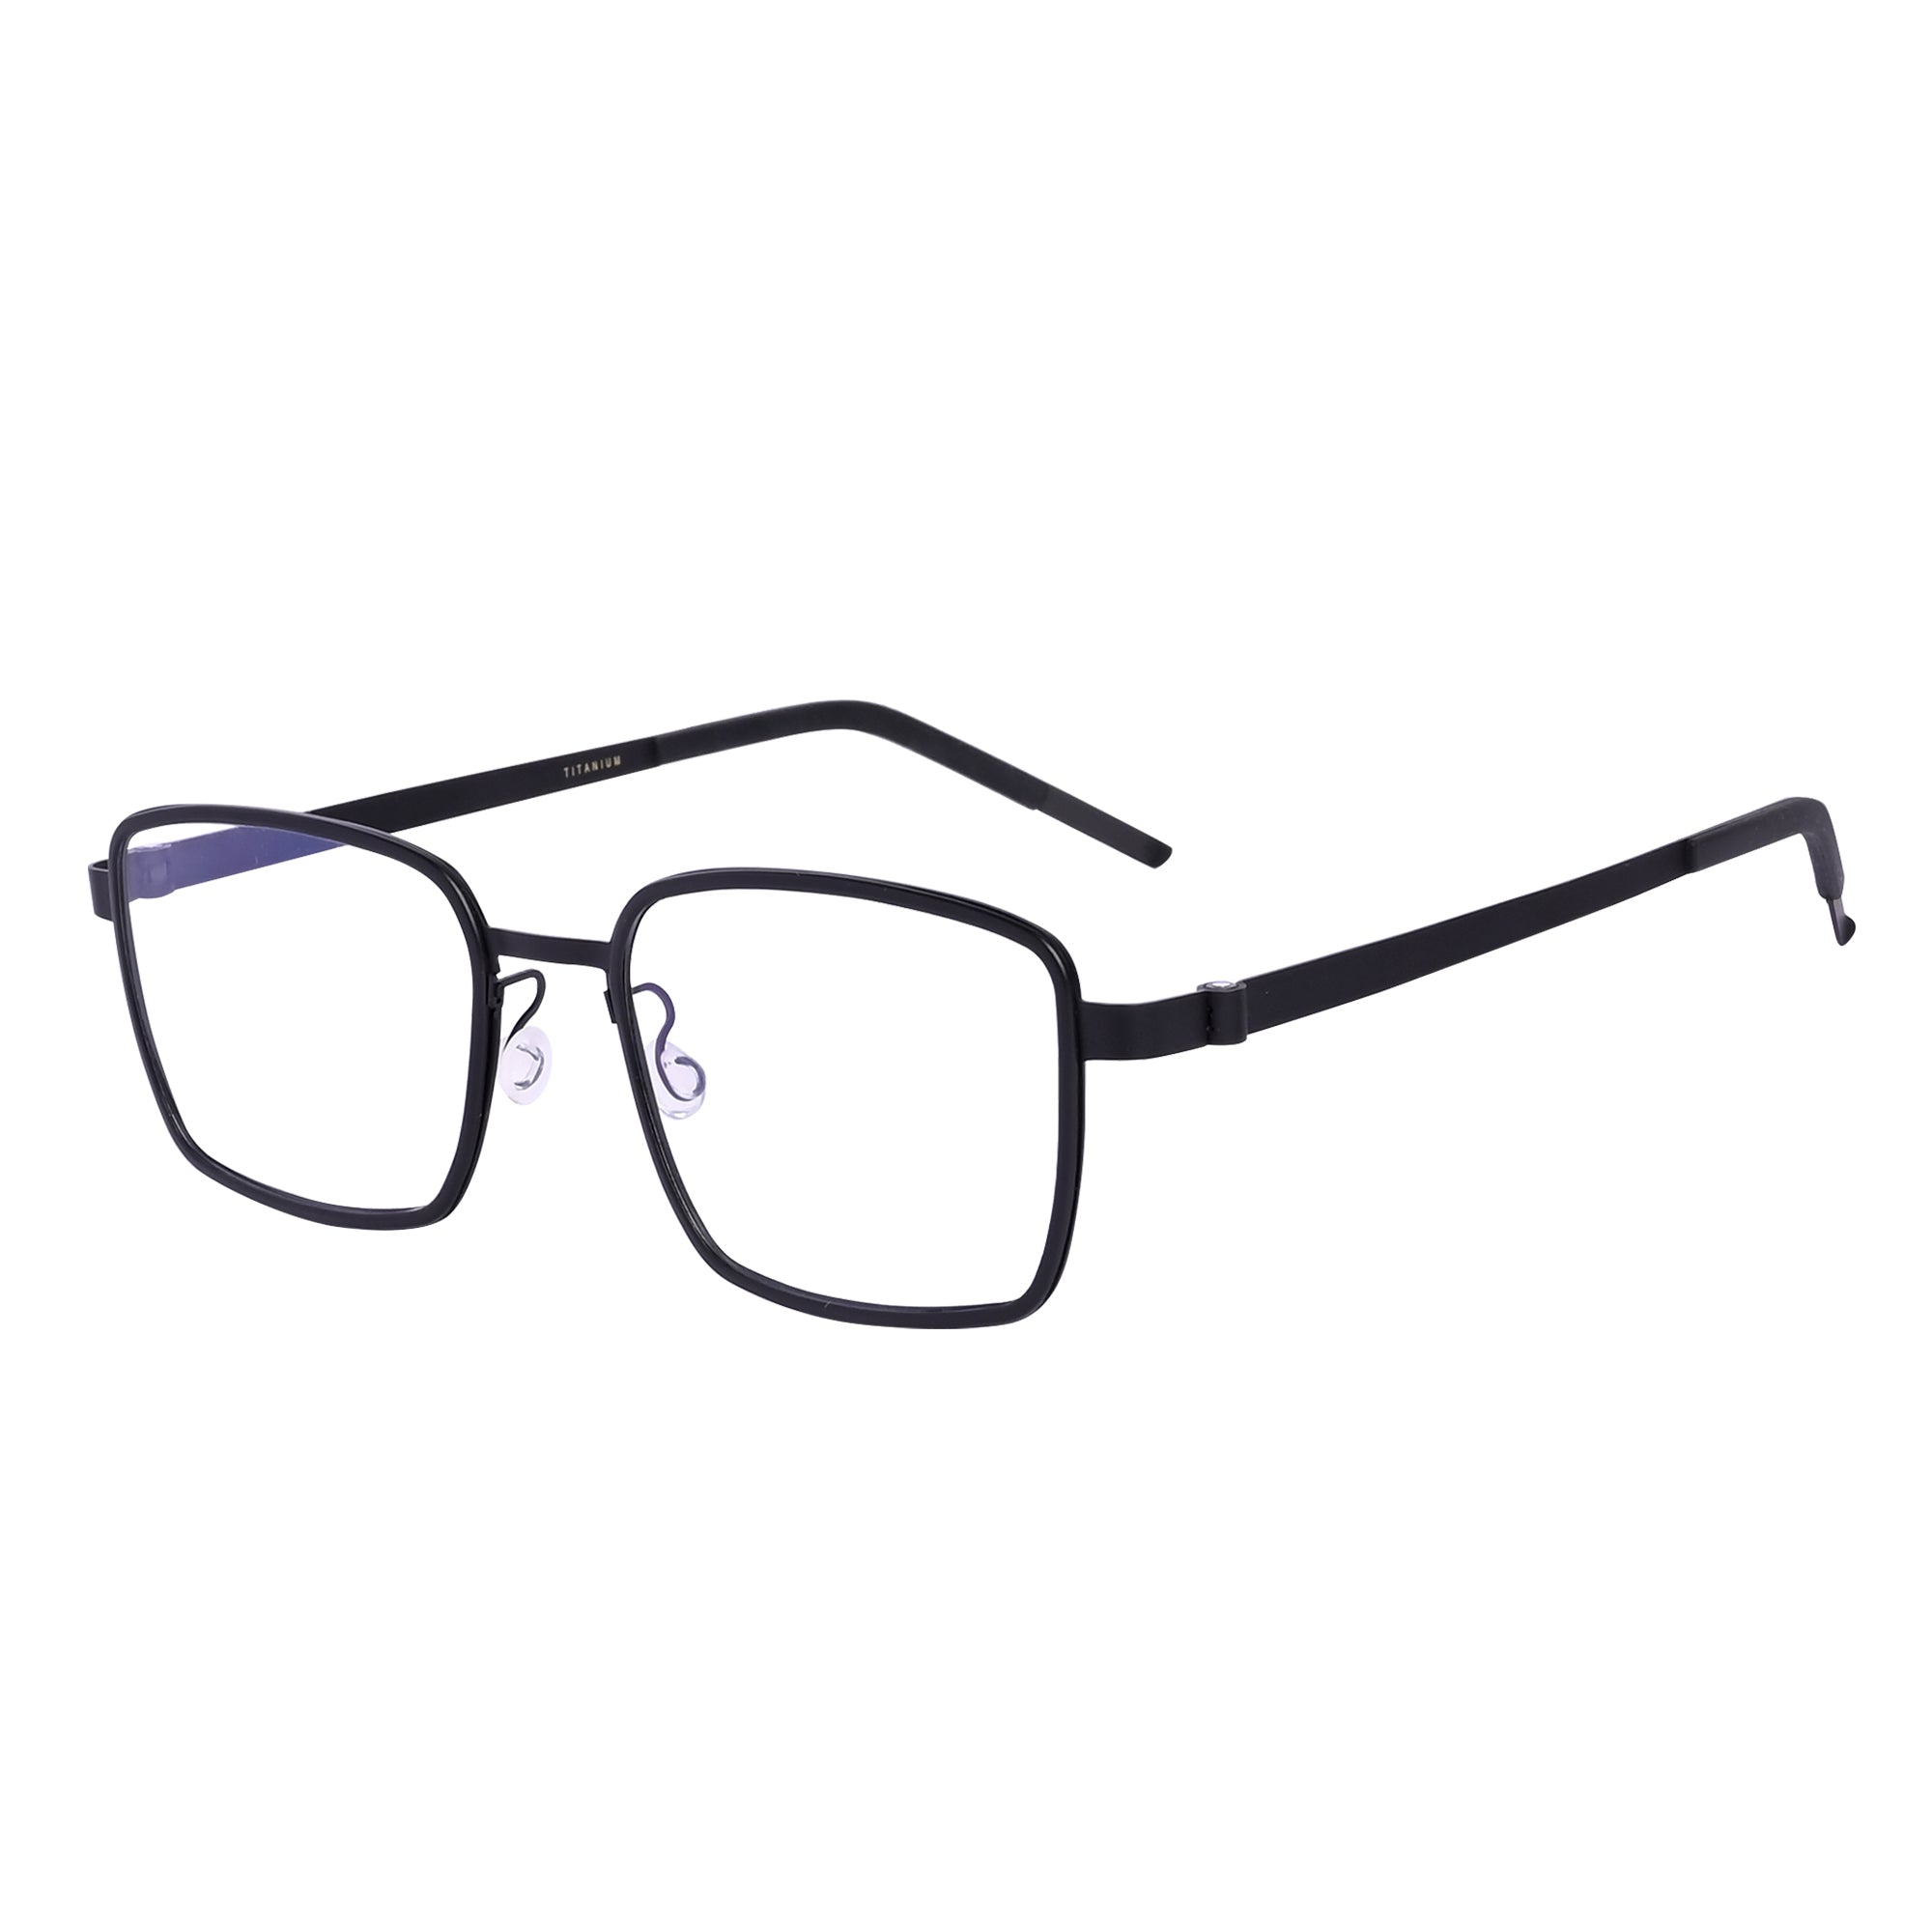 Black Titanium Square Eyeglasses - LG-001 GRBLK